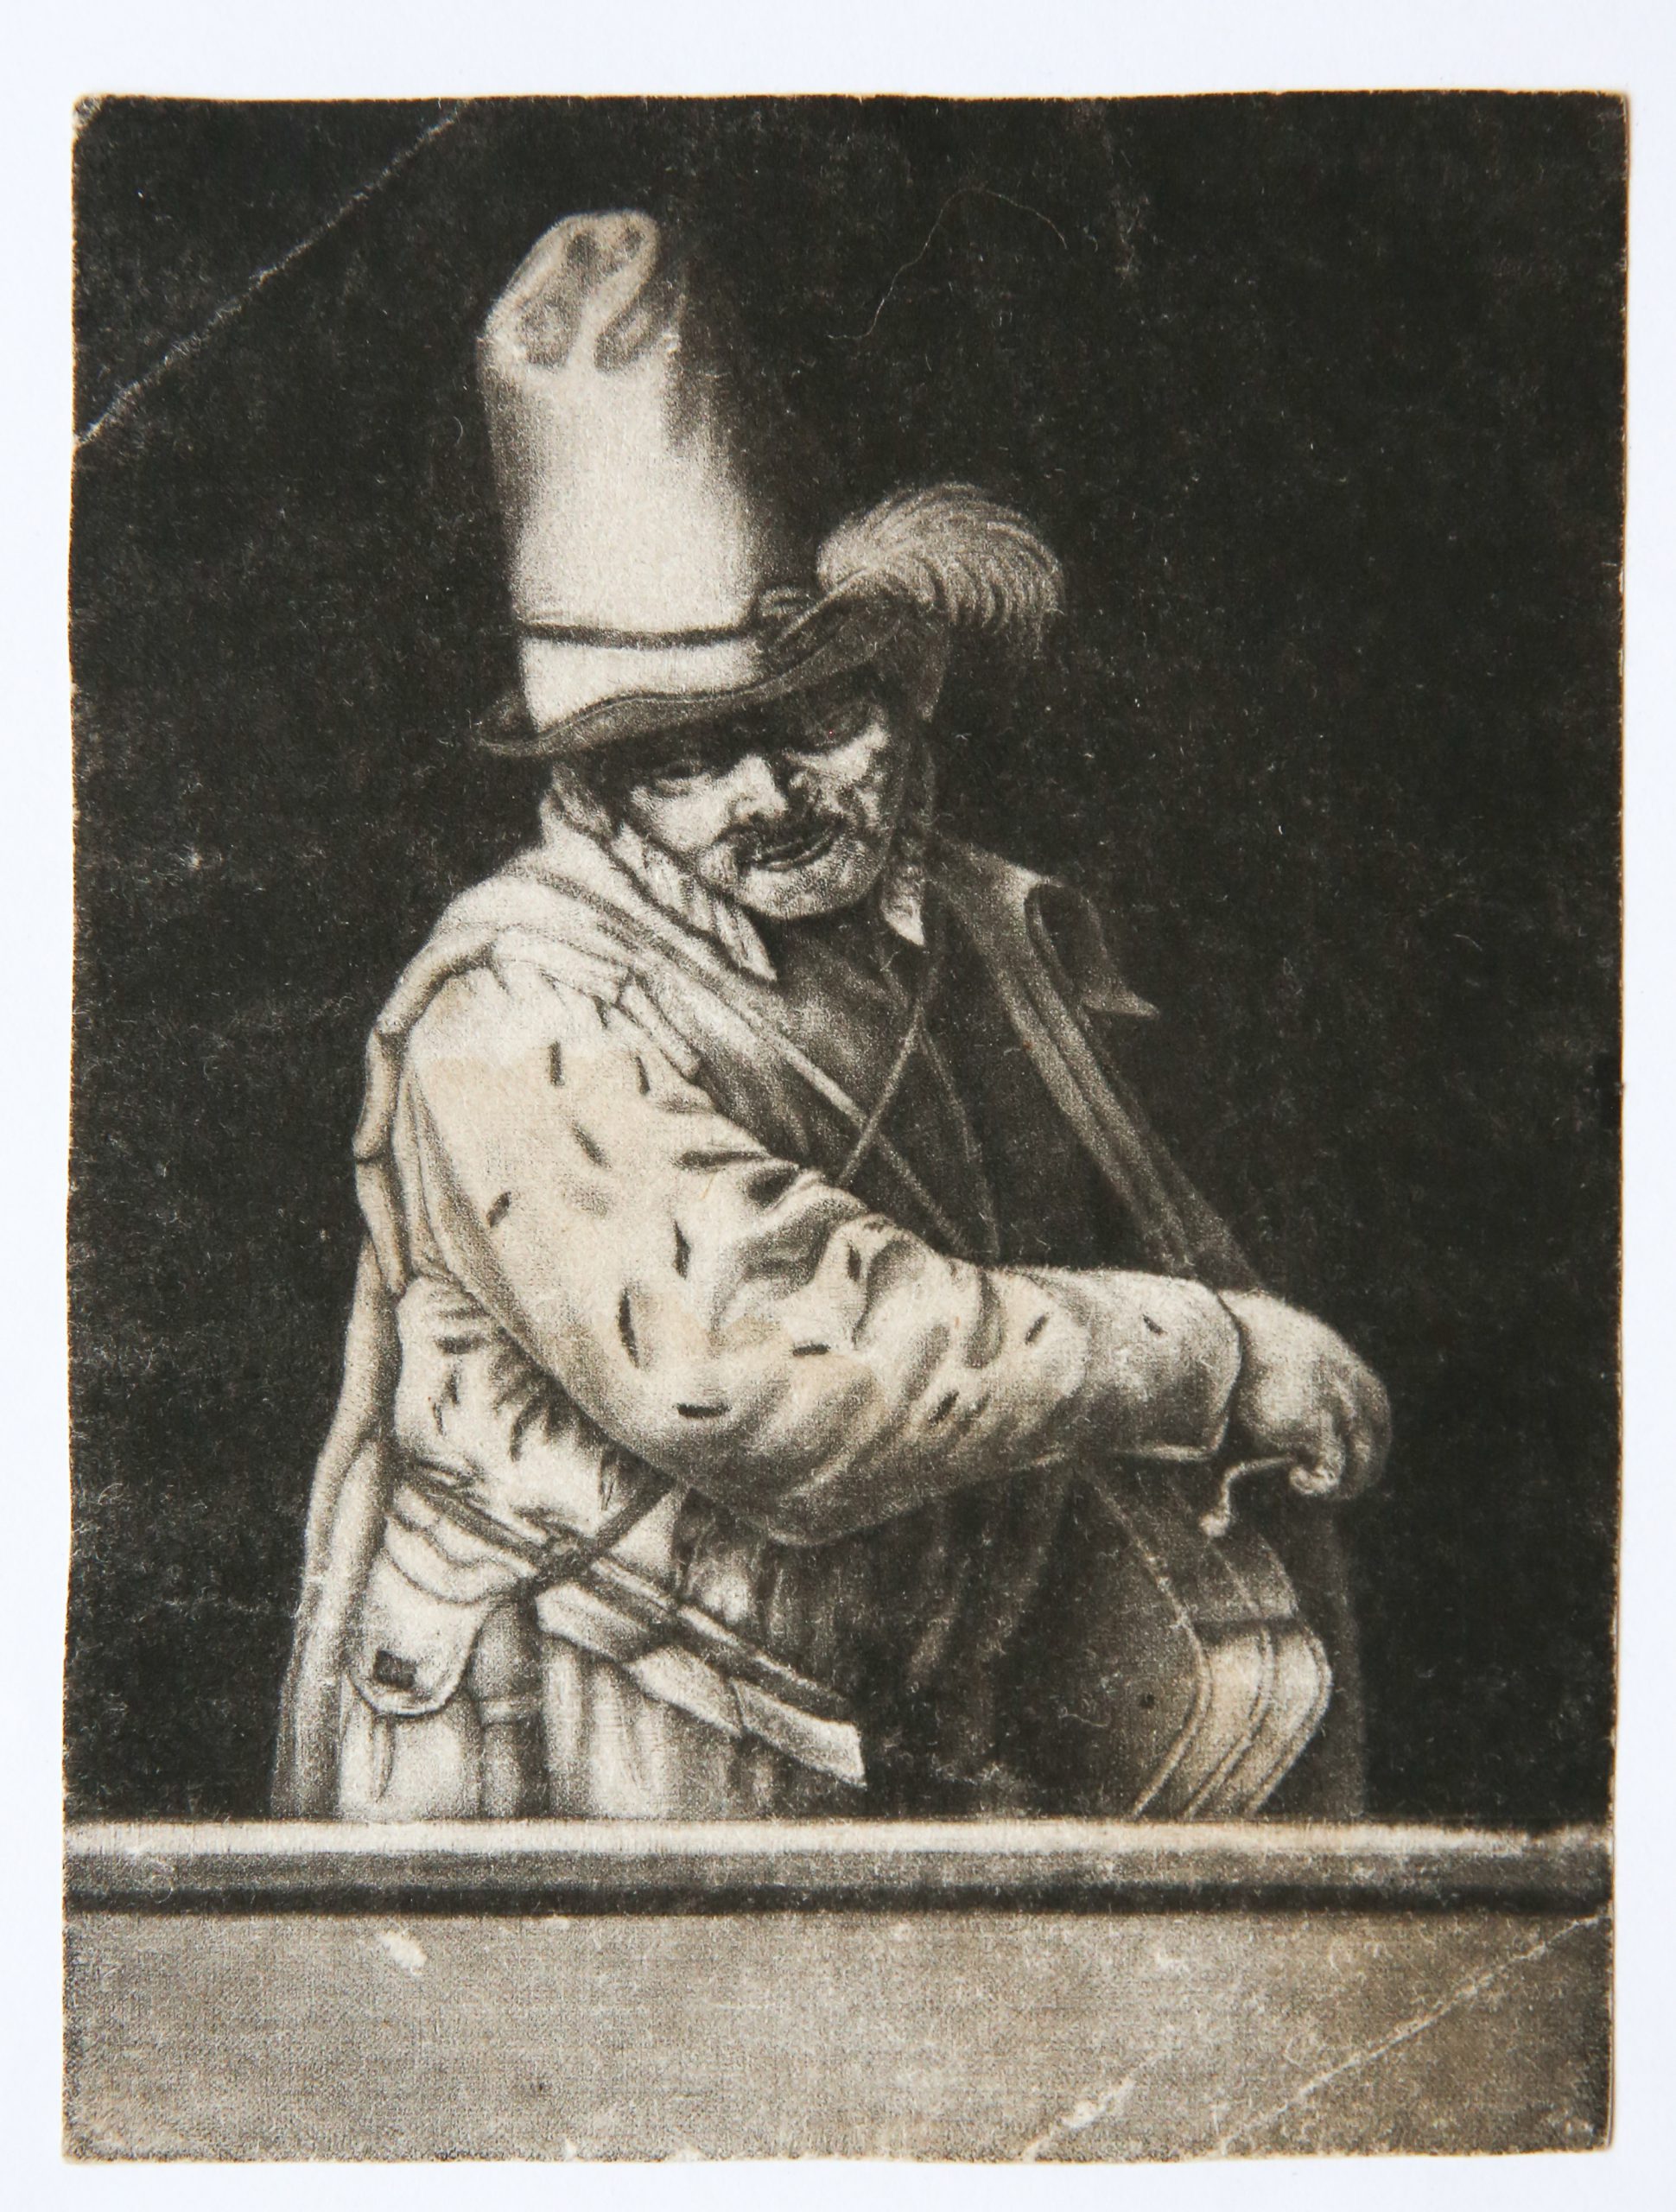 [Antique print, mezzotint] The hurdy-gurdy player, 18th century.